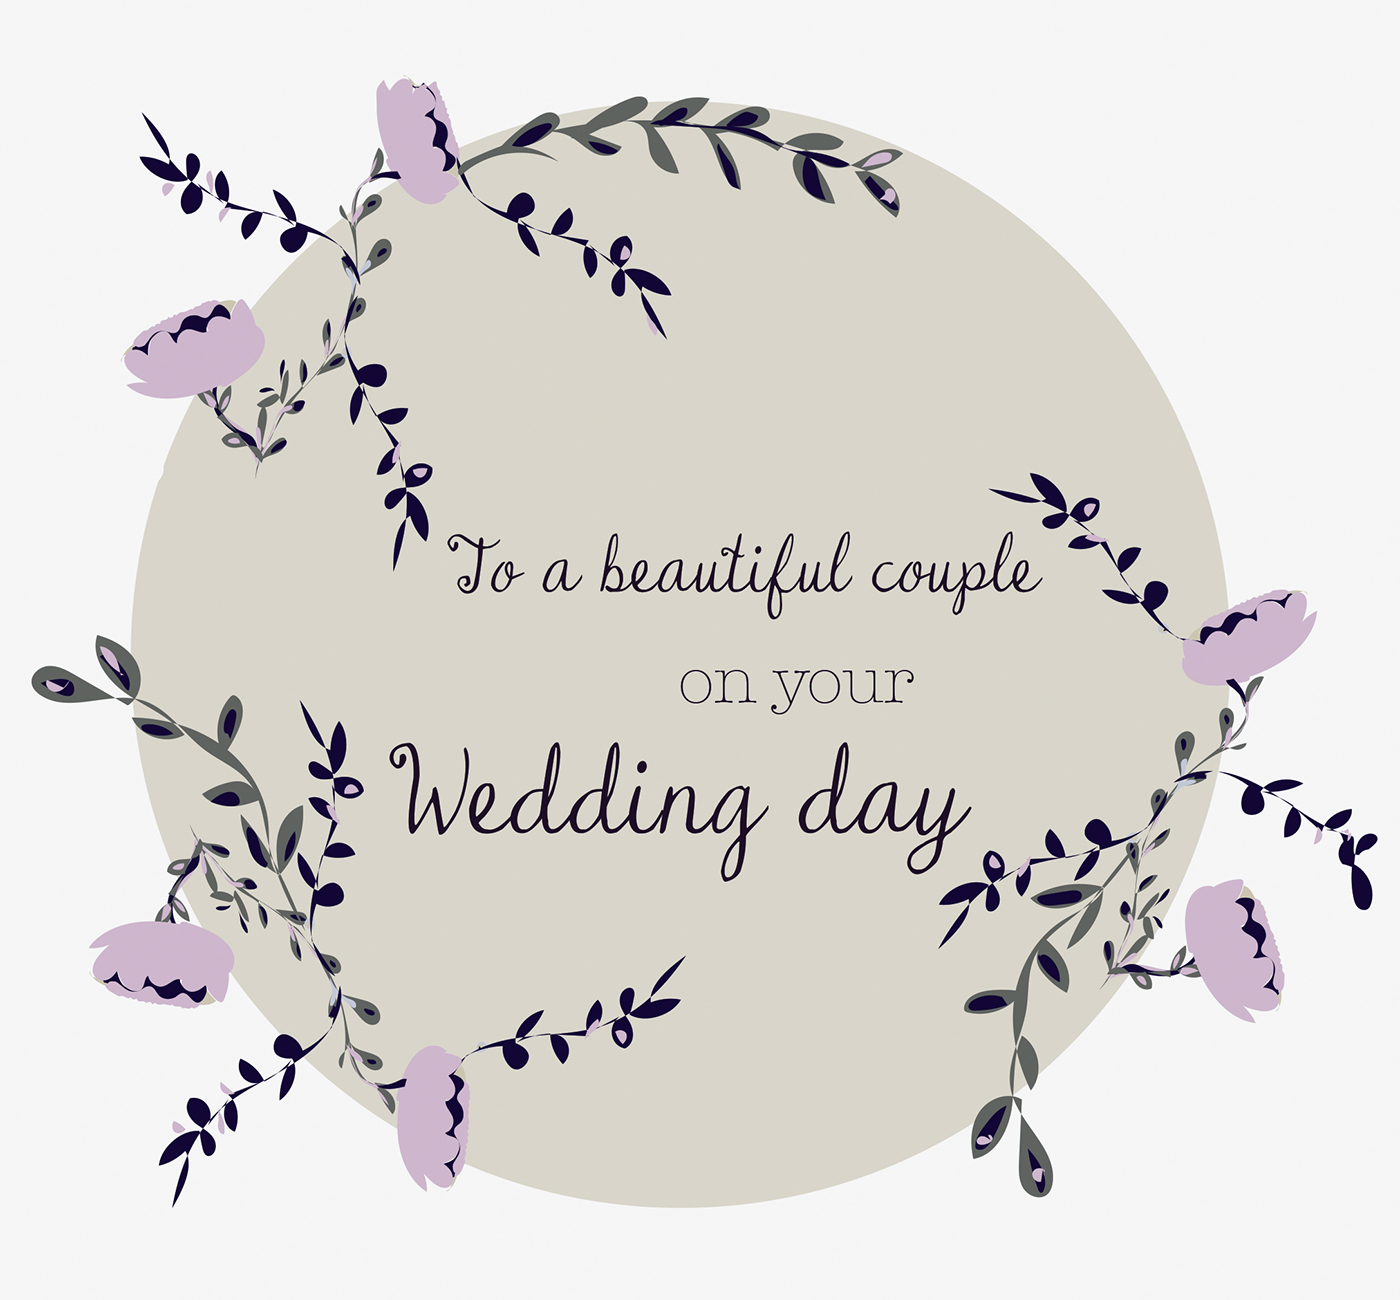 Illustrator photoshop Wacomtablet wedding cards Greetingcards colour pattern floral